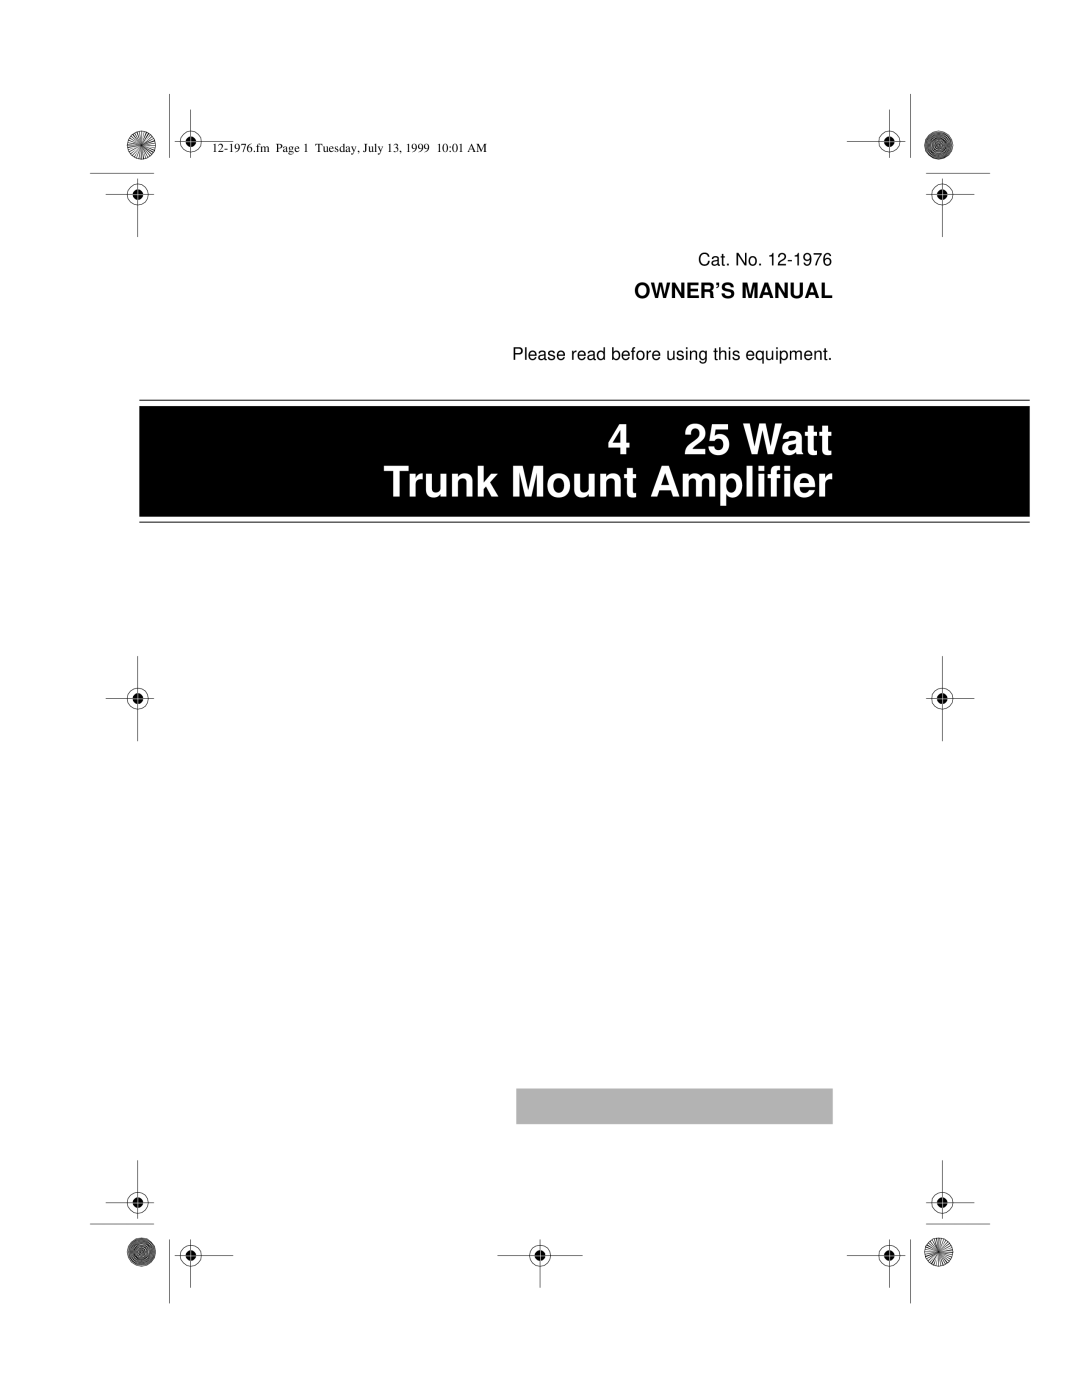 Radio Shack owner manual Owner’S Manual, 4 × 25 Watt Trunk Mount Amplifier, fmPage 1 Tuesday, July 13, 1999 10:01 AM 